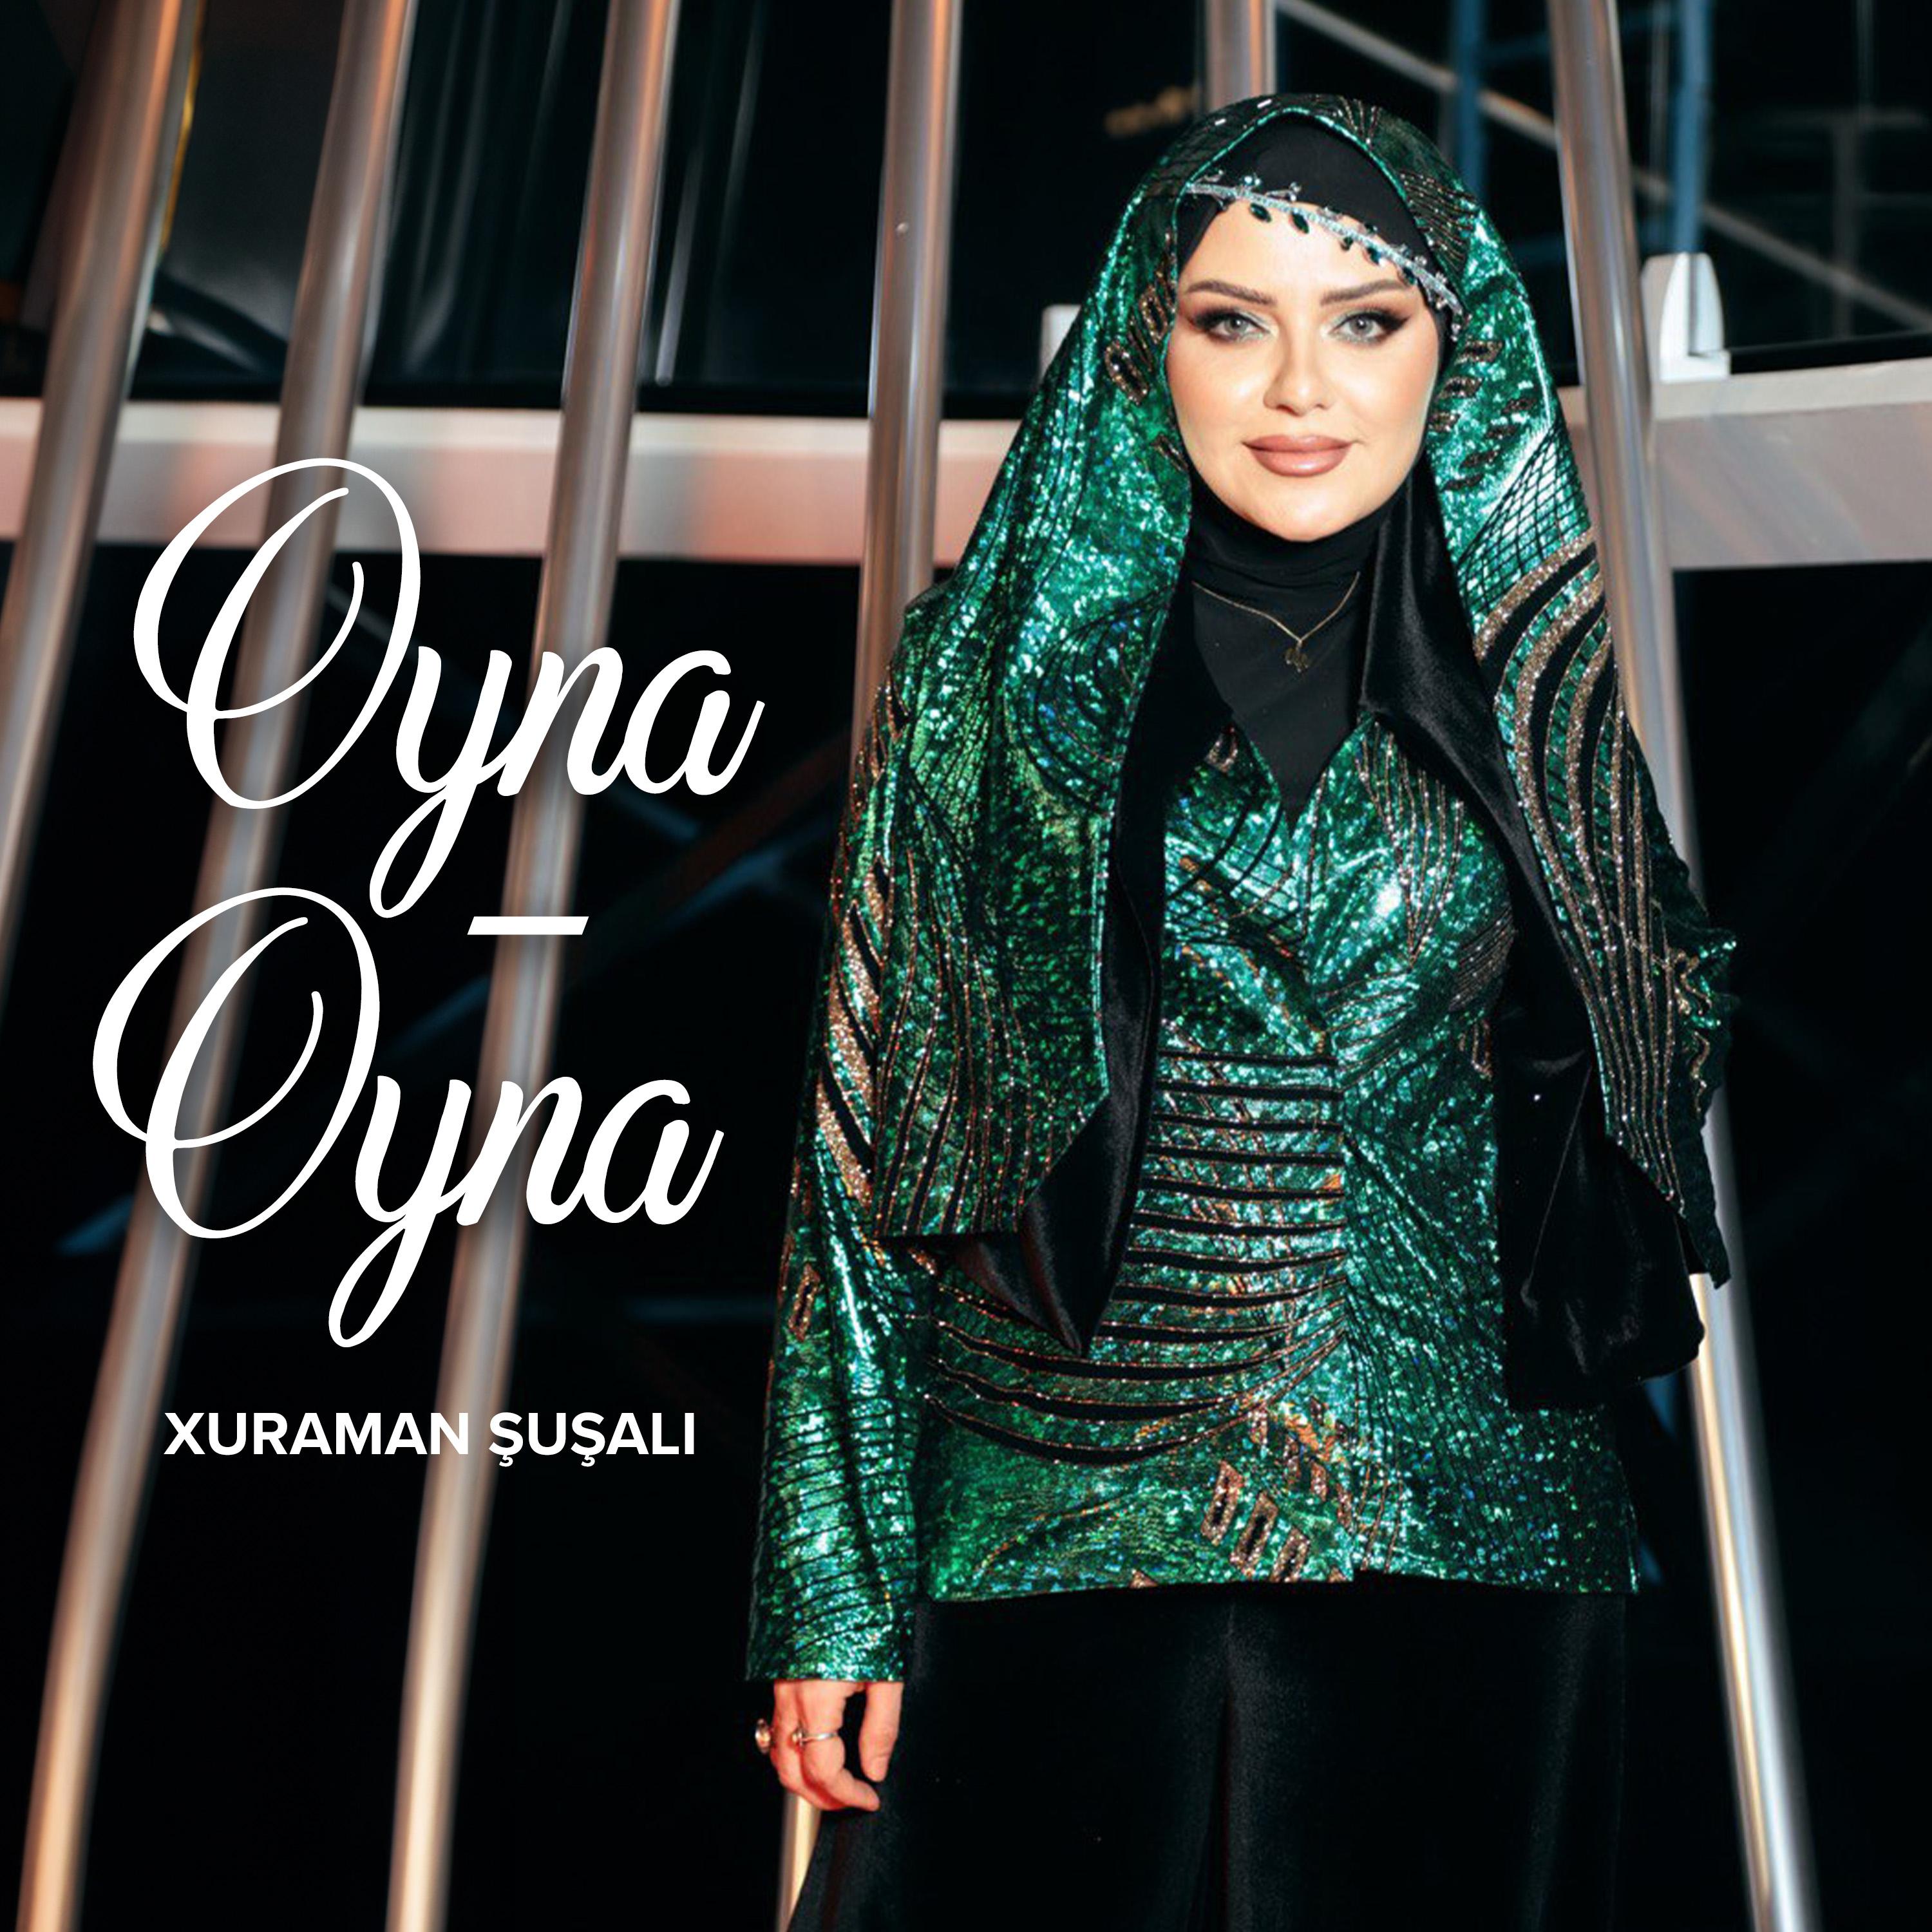 Постер альбома Oyna-Oyna